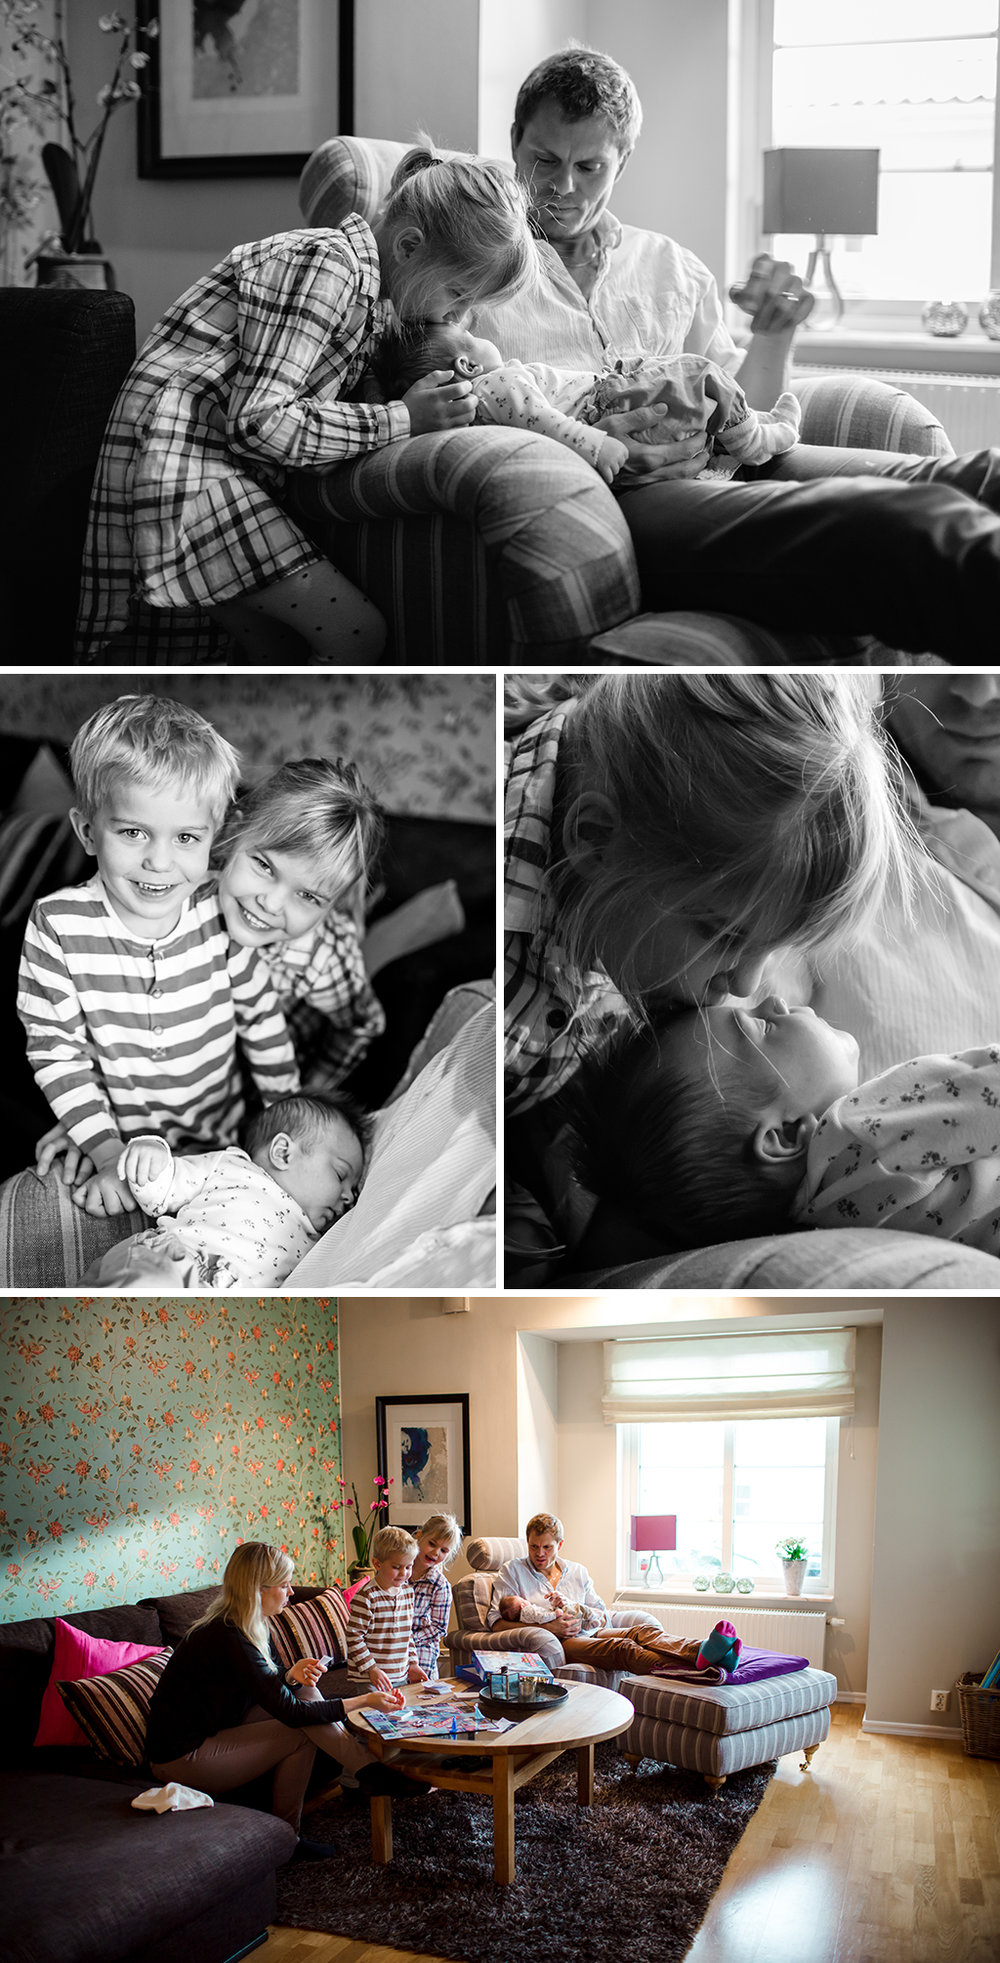 Nyfoddfotografering-lifestyle-familjefotografering-Stockholm-2.jpg